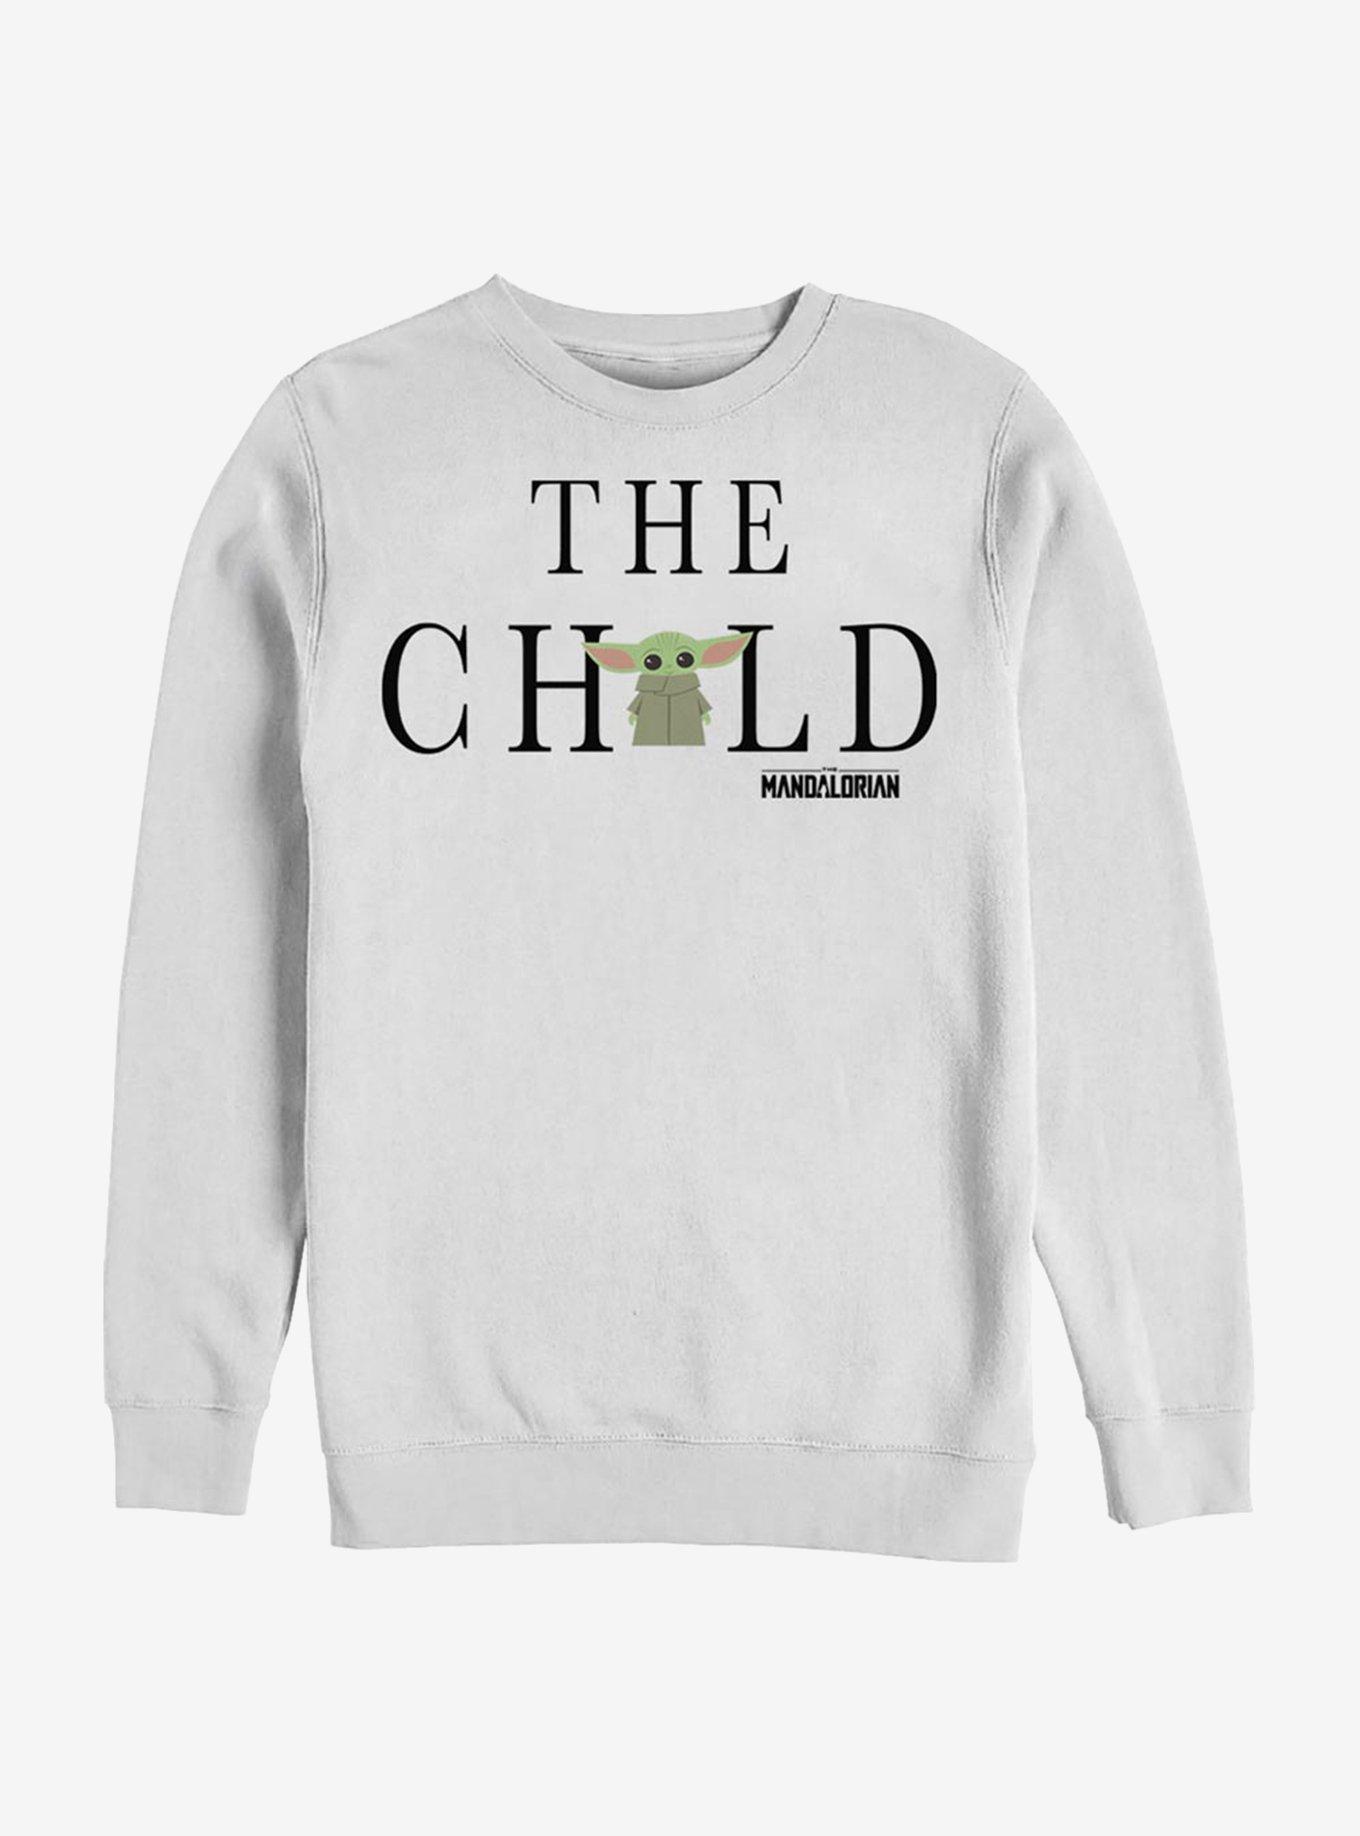 Star Wars The Mandalorian Child Text Sweatshirt, WHITE, hi-res